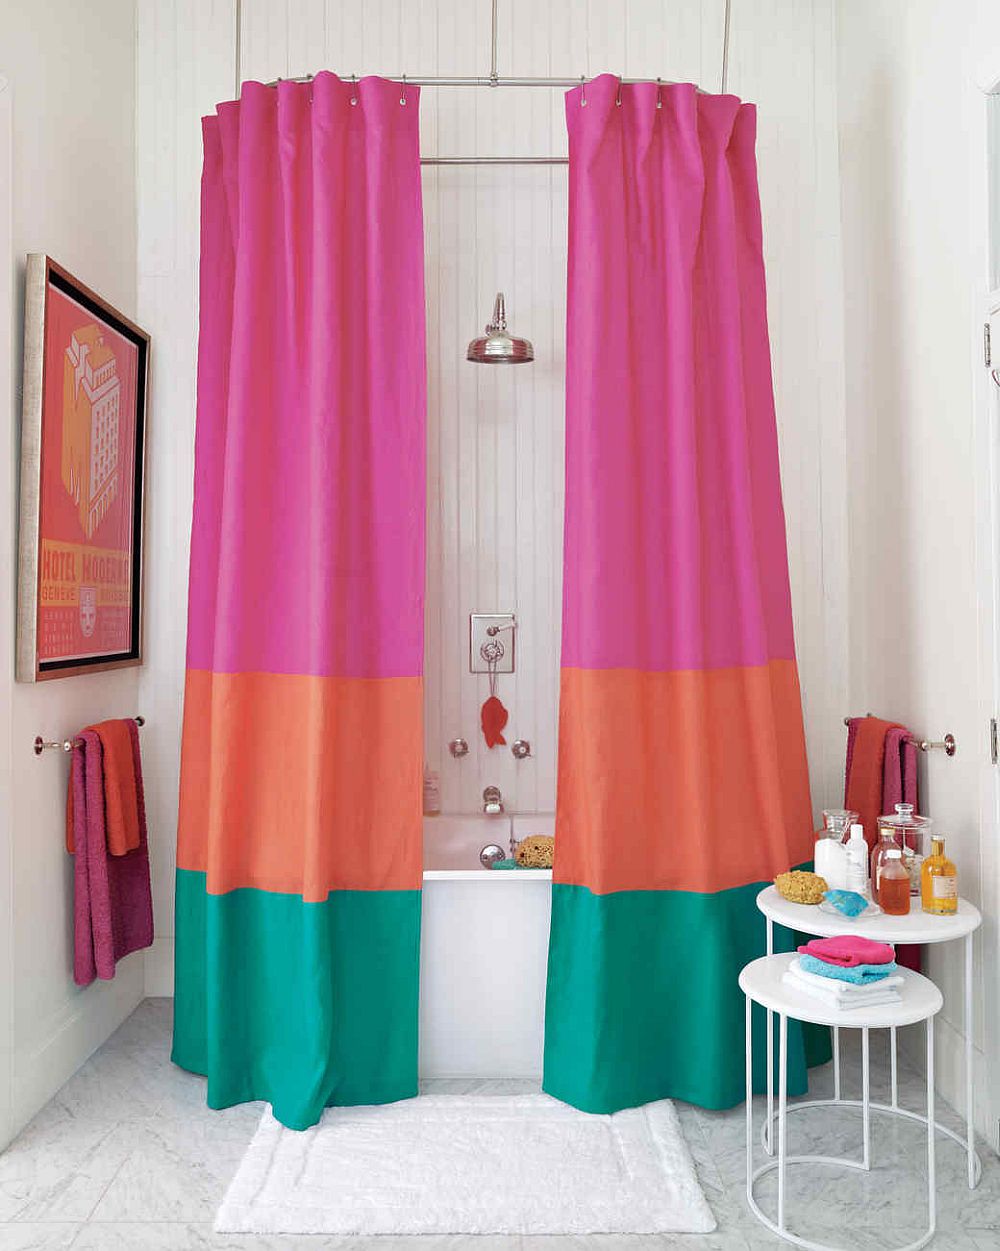 DIY-Color-Block-Shower-Curtain